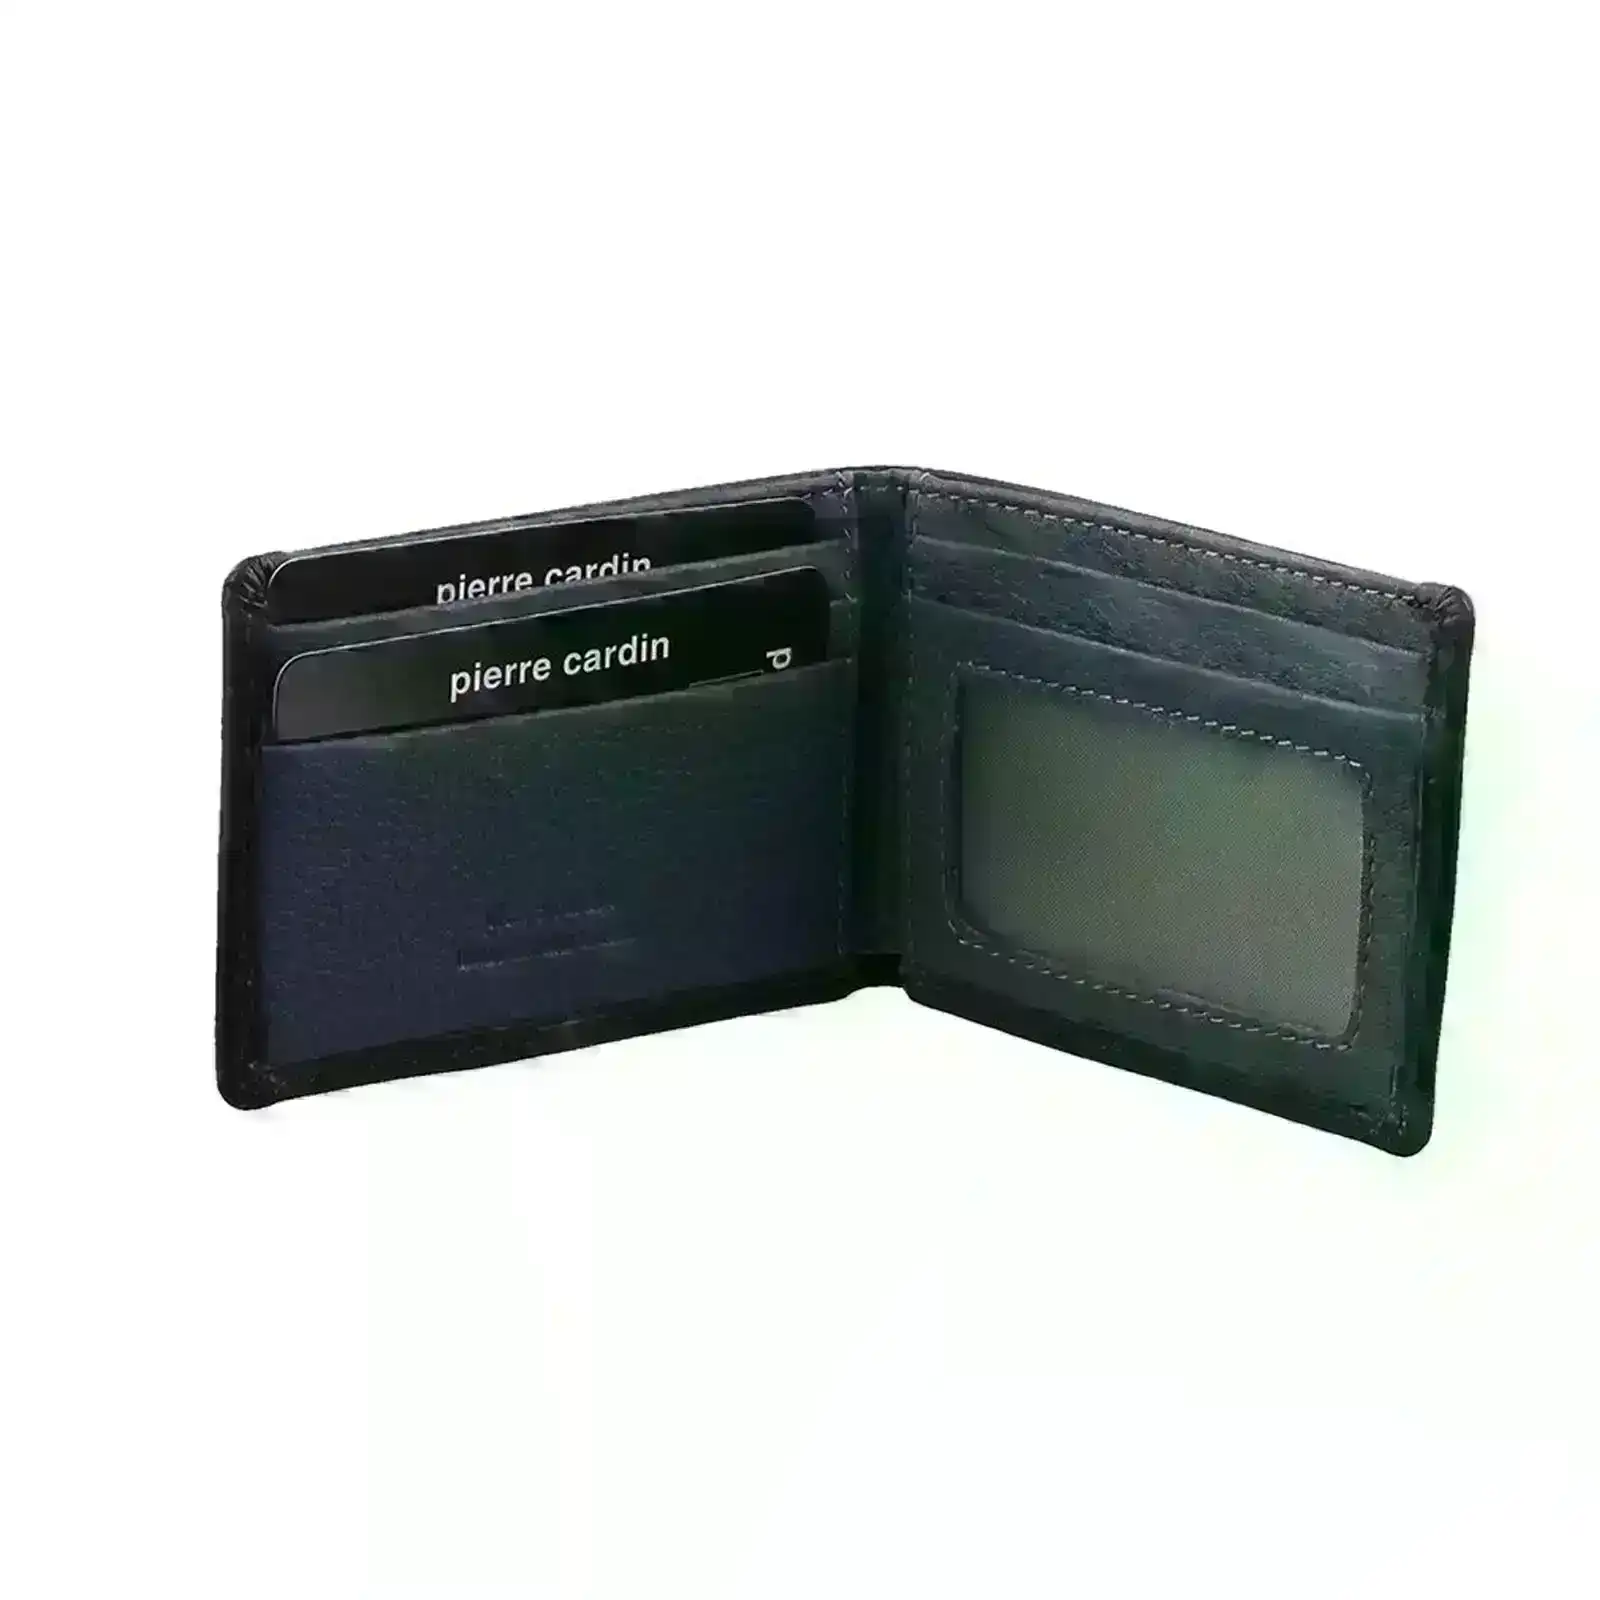 Pierre Cardin Mens Leather RFID Italian Two-Tone Wallet - Black/Navy